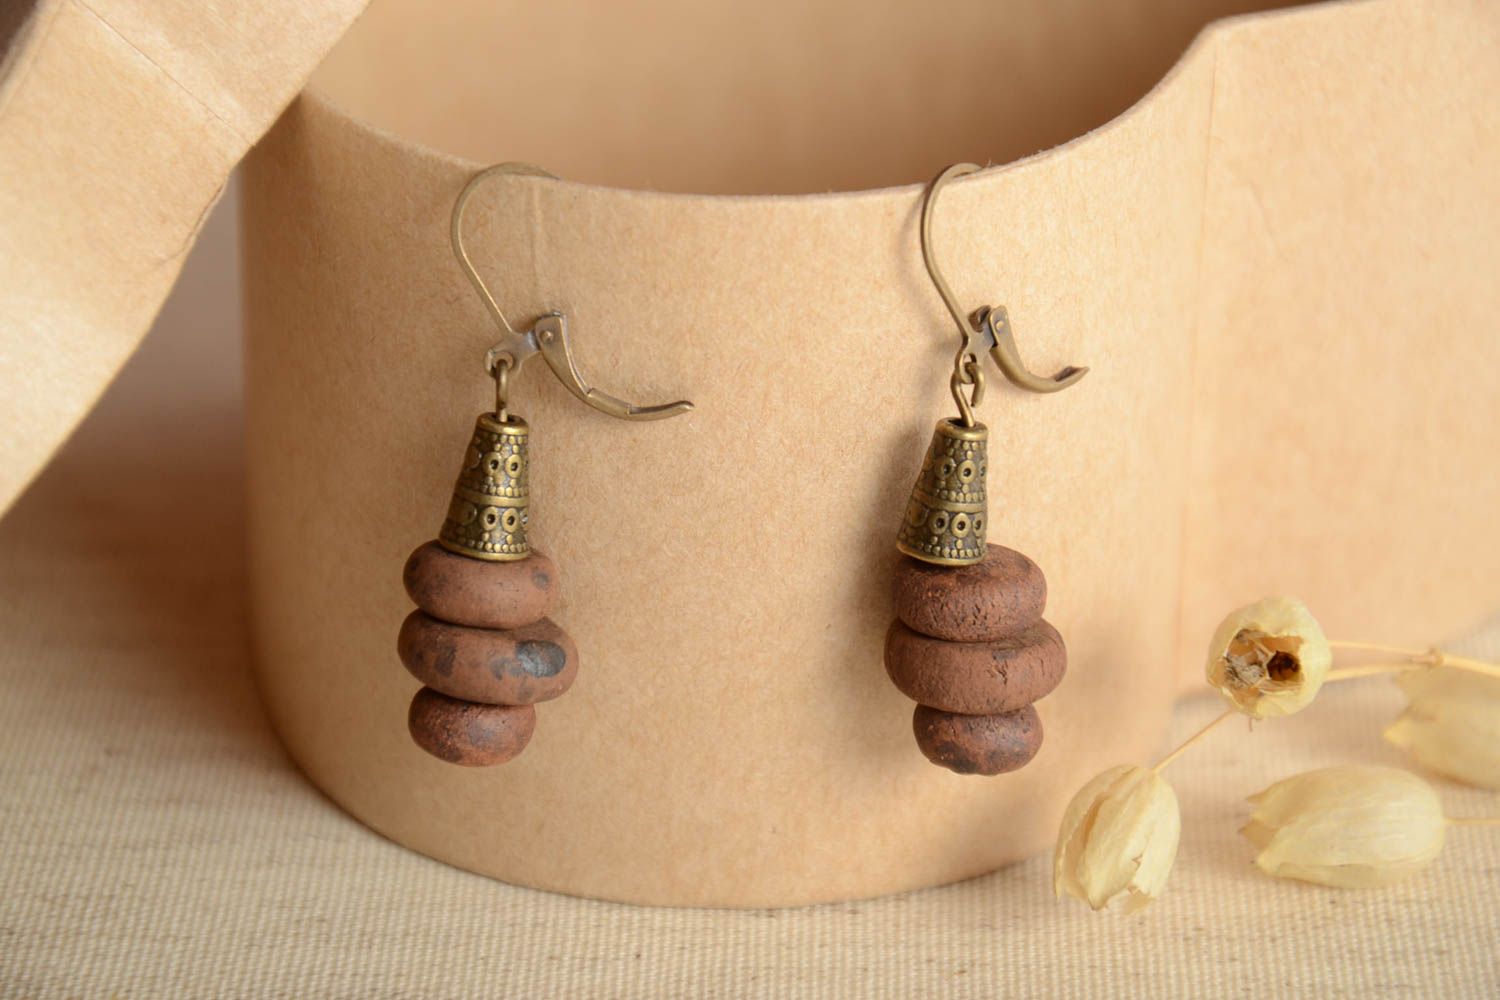 Handmade earrings ceramic jewelry unusual accessory gift ideas designer earrings photo 1